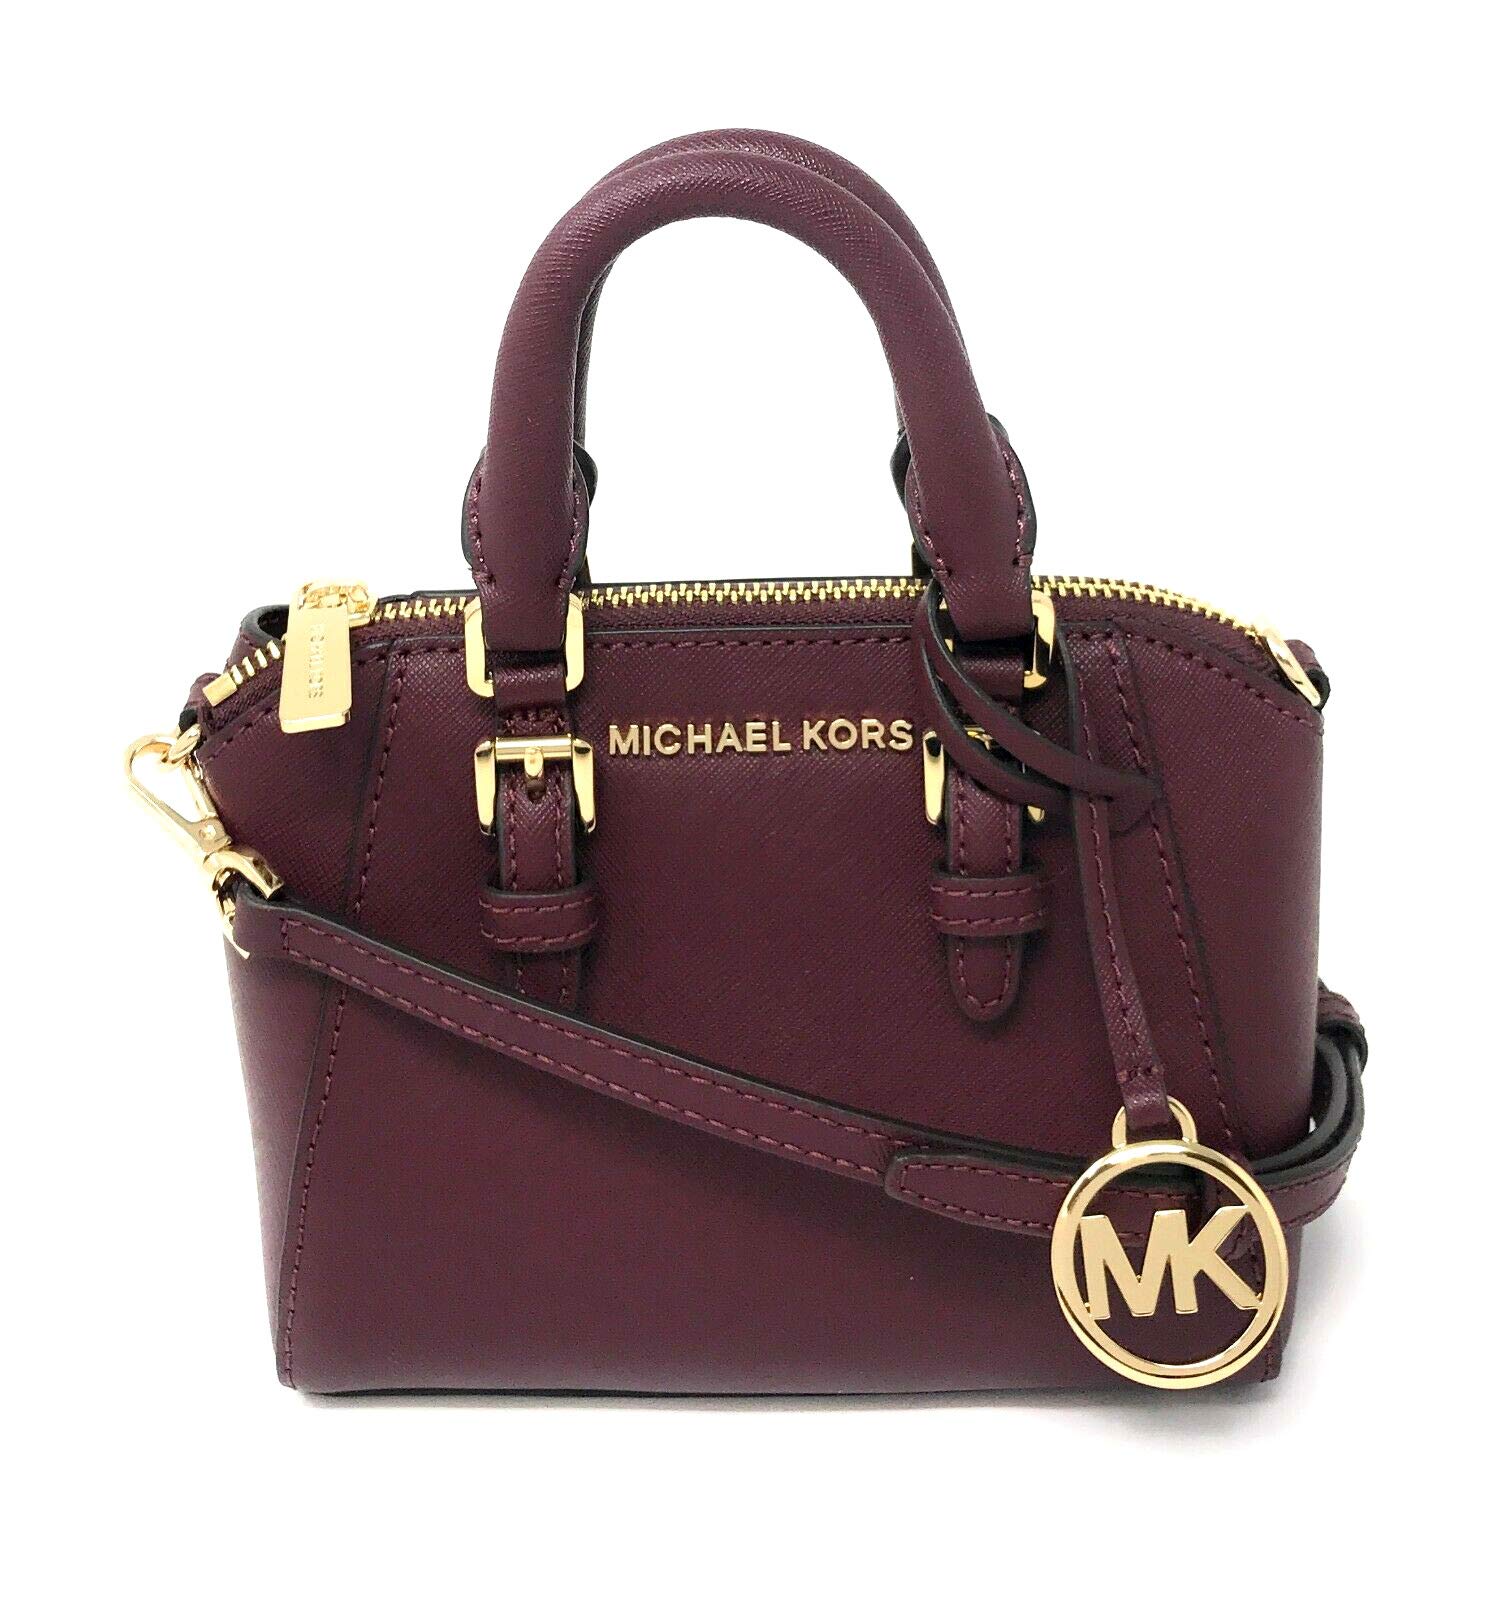 Michael Kors Mini Bag  137 44 Off Retail  From Dyniah